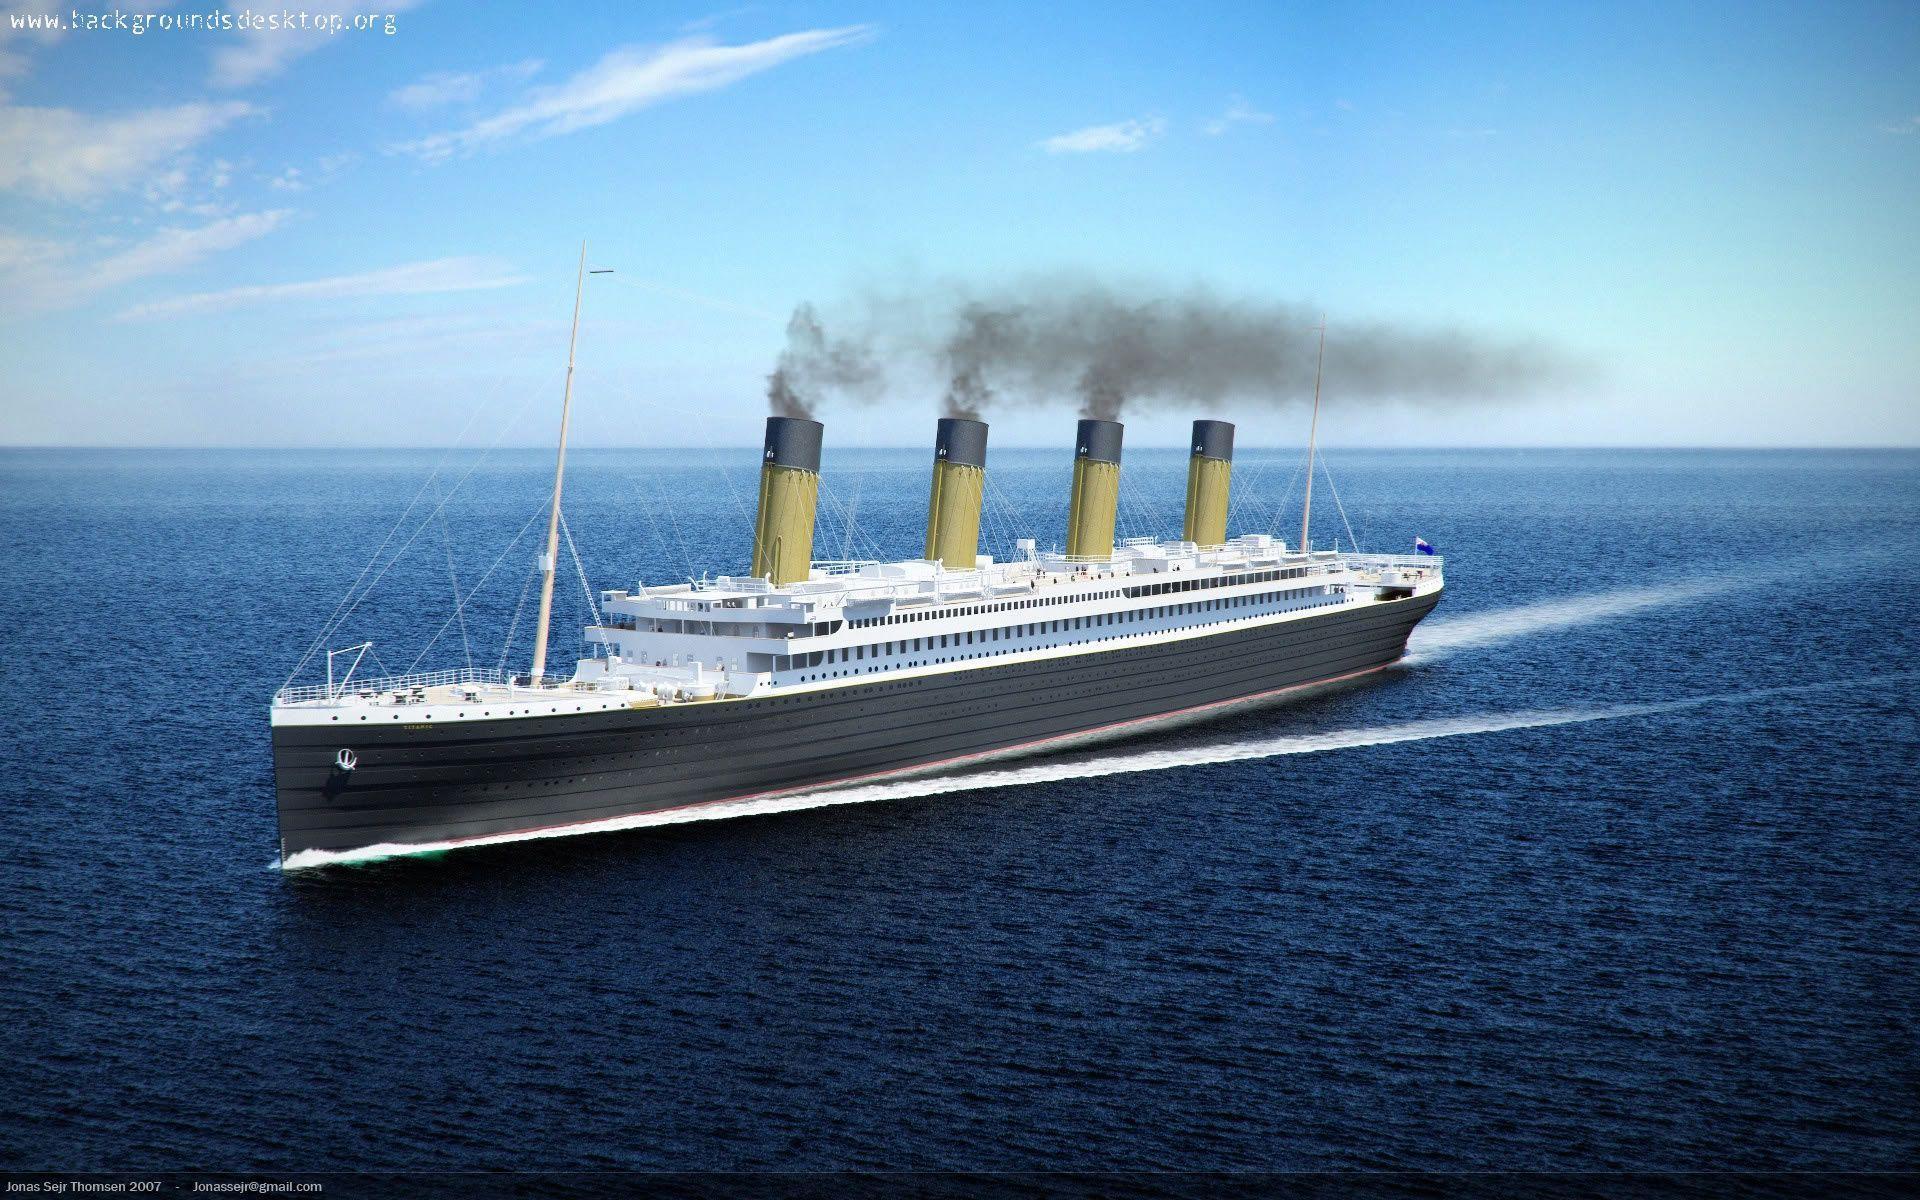 Titanic Ship Wallpaper